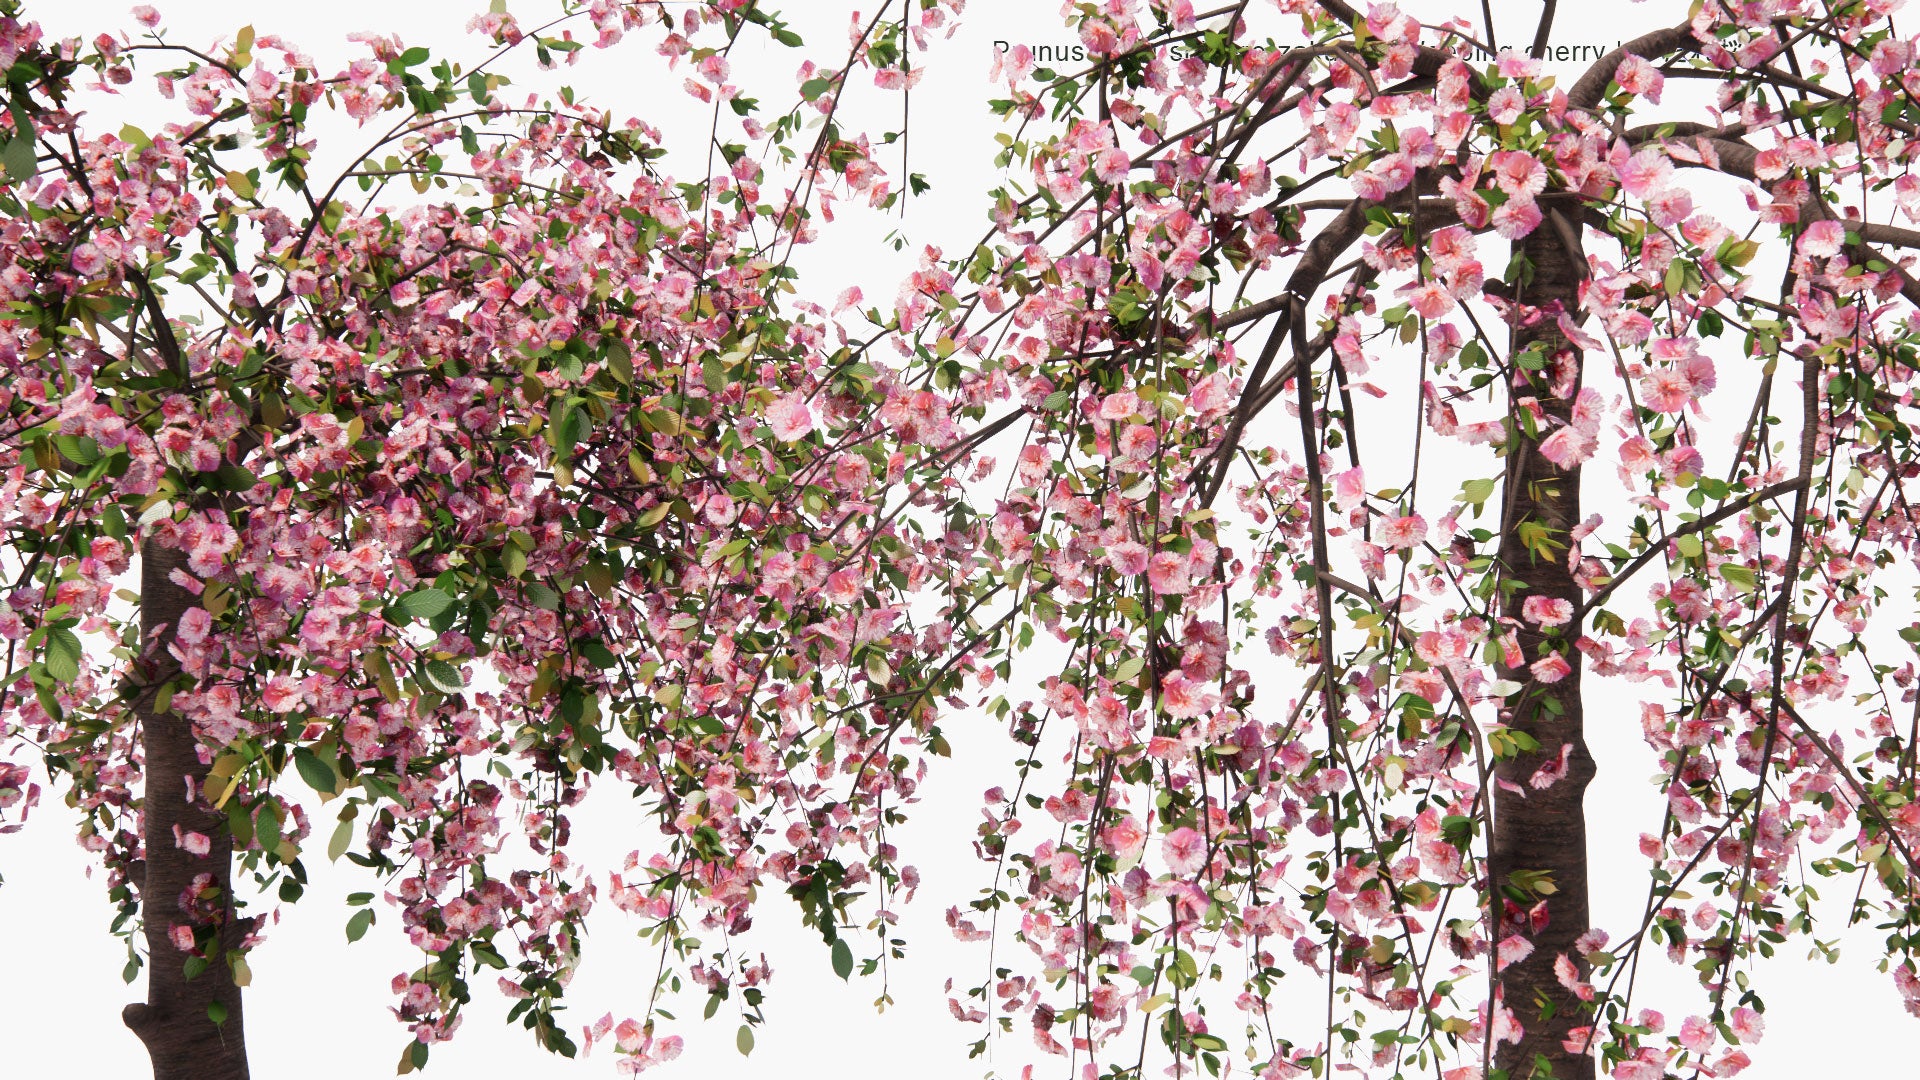 Low Poly Prunus 'Kiku-Shidare-Zakura' - Weeping cherry, しだれ桜 (3D Model)